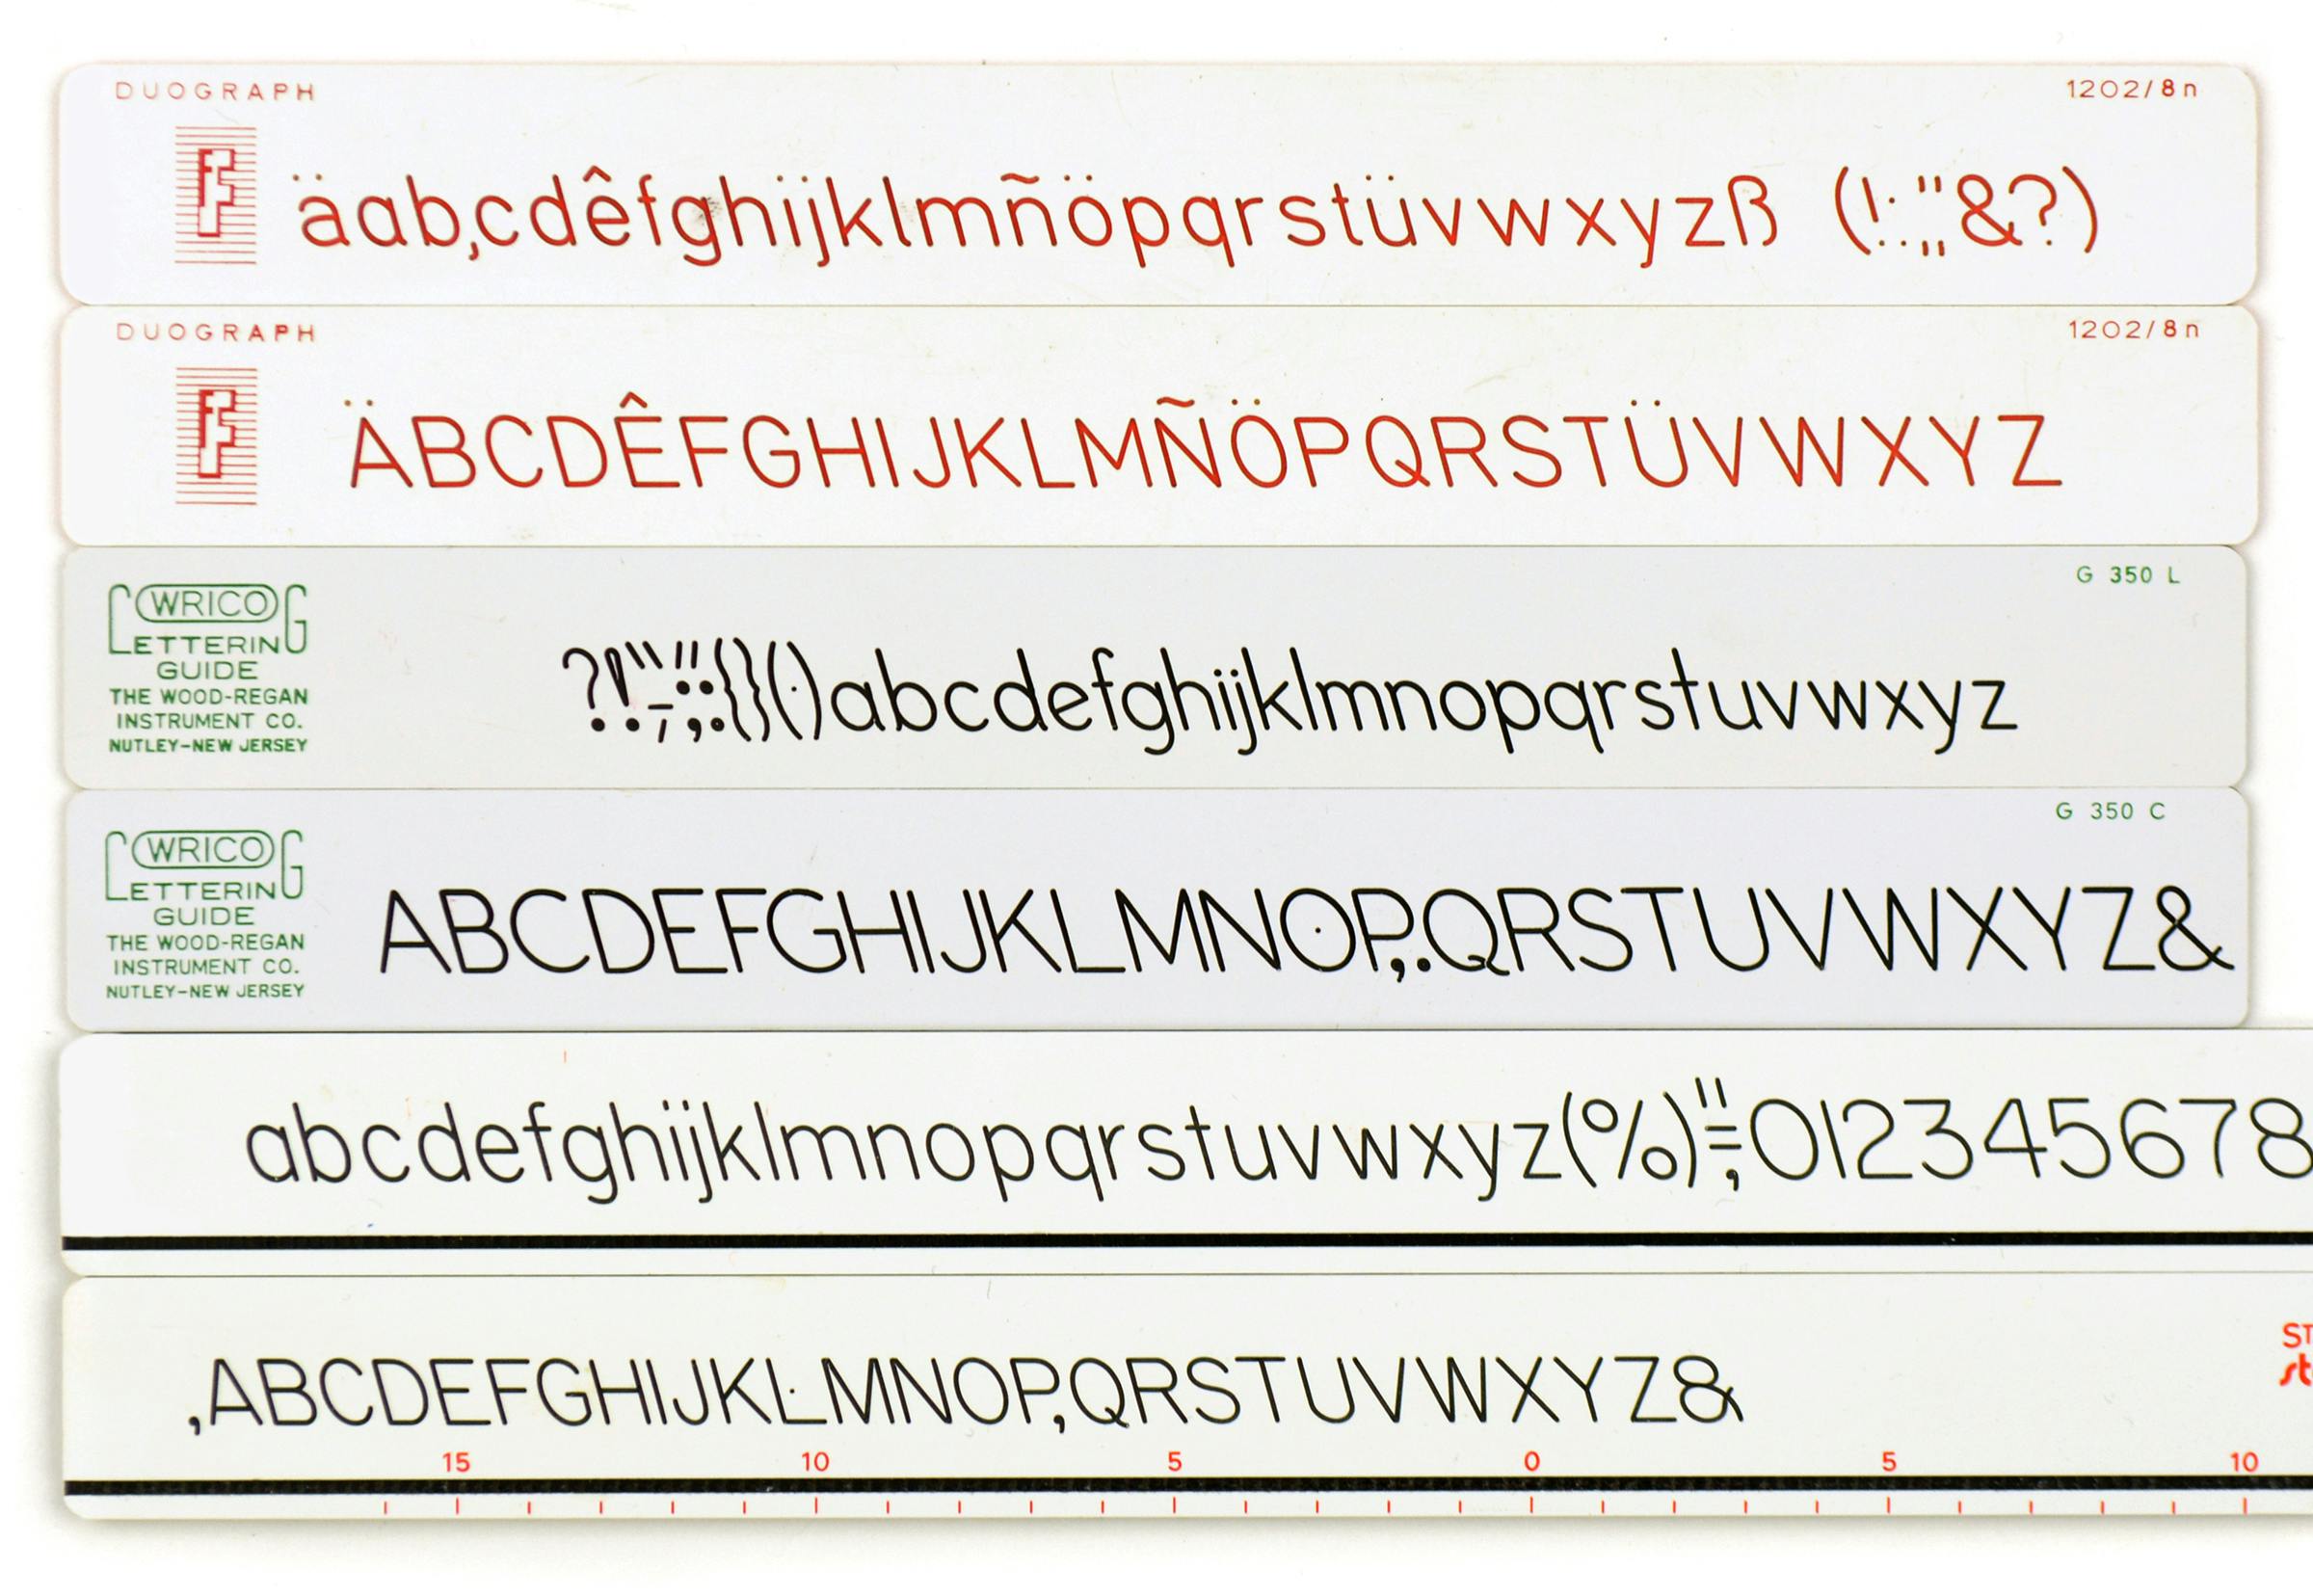 Letterform variety